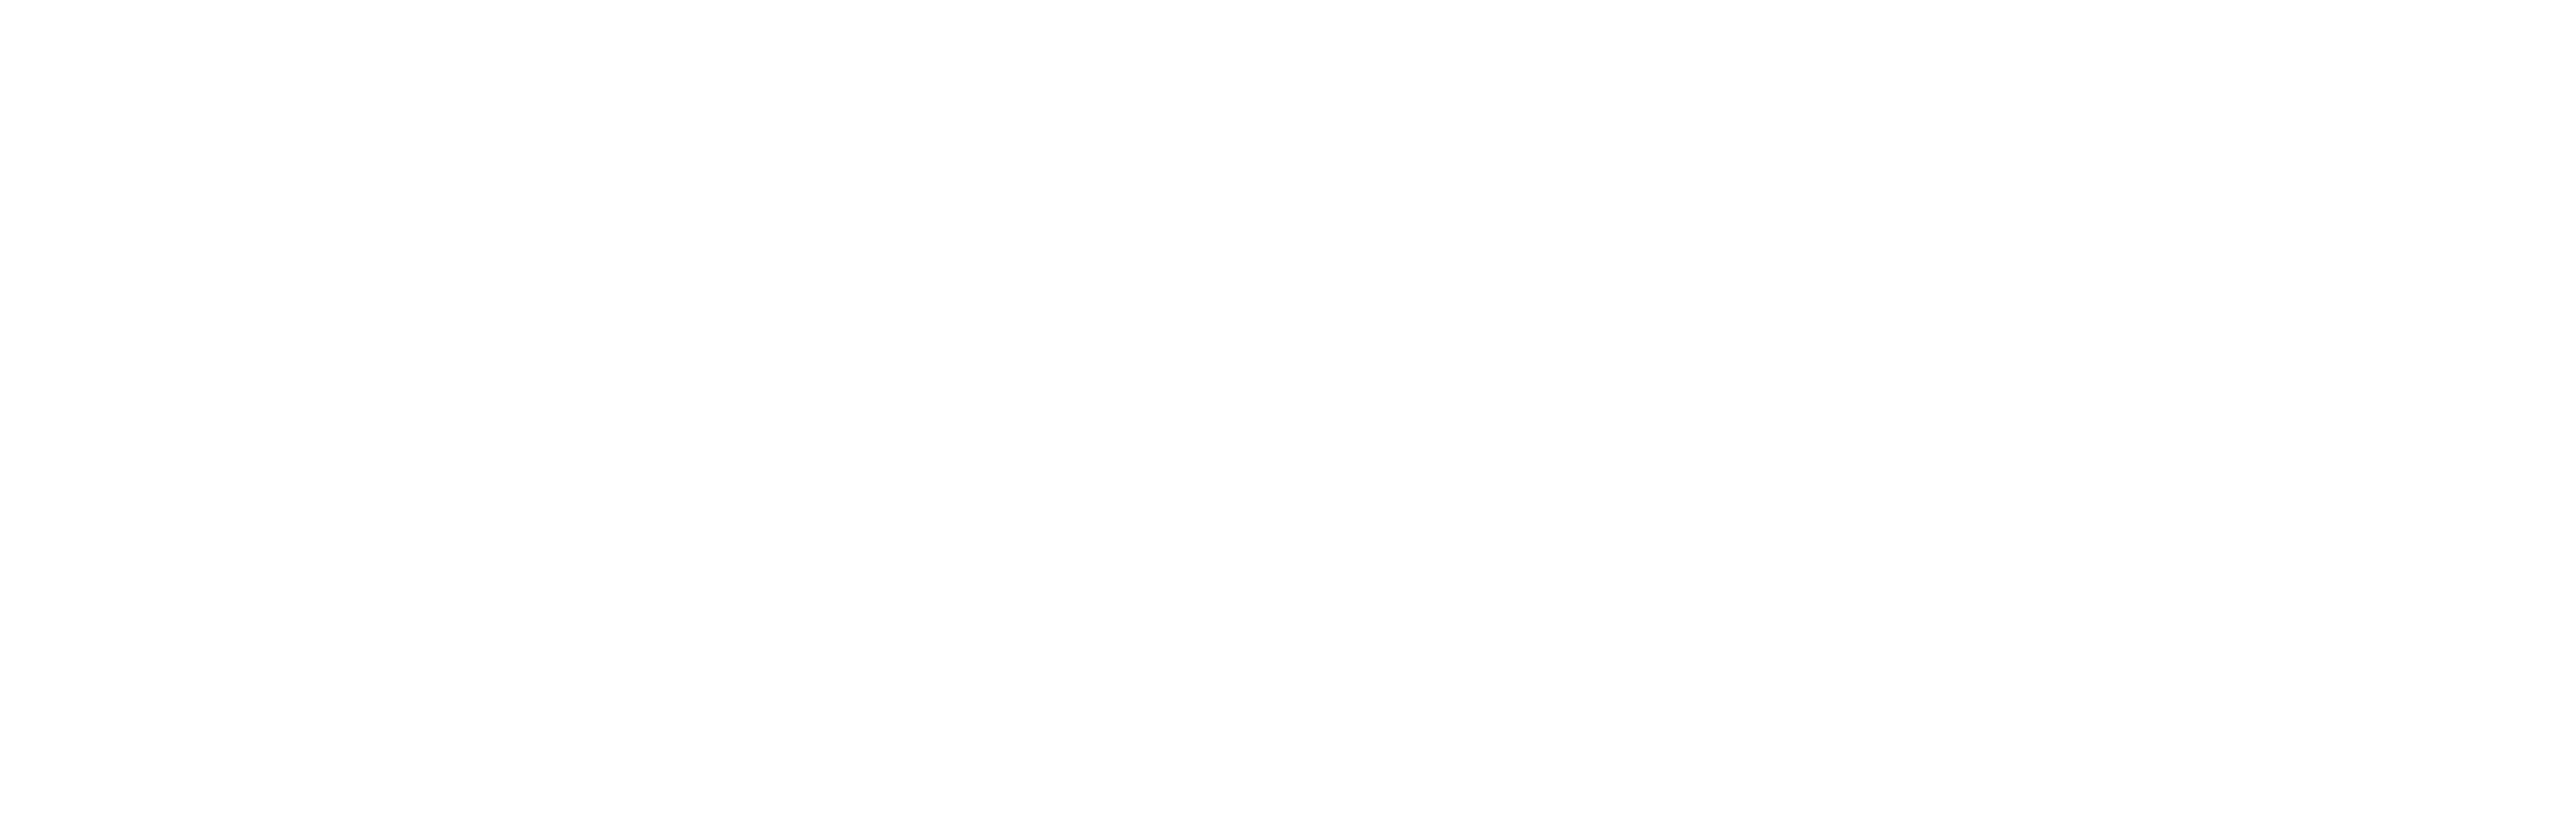 User Researcher